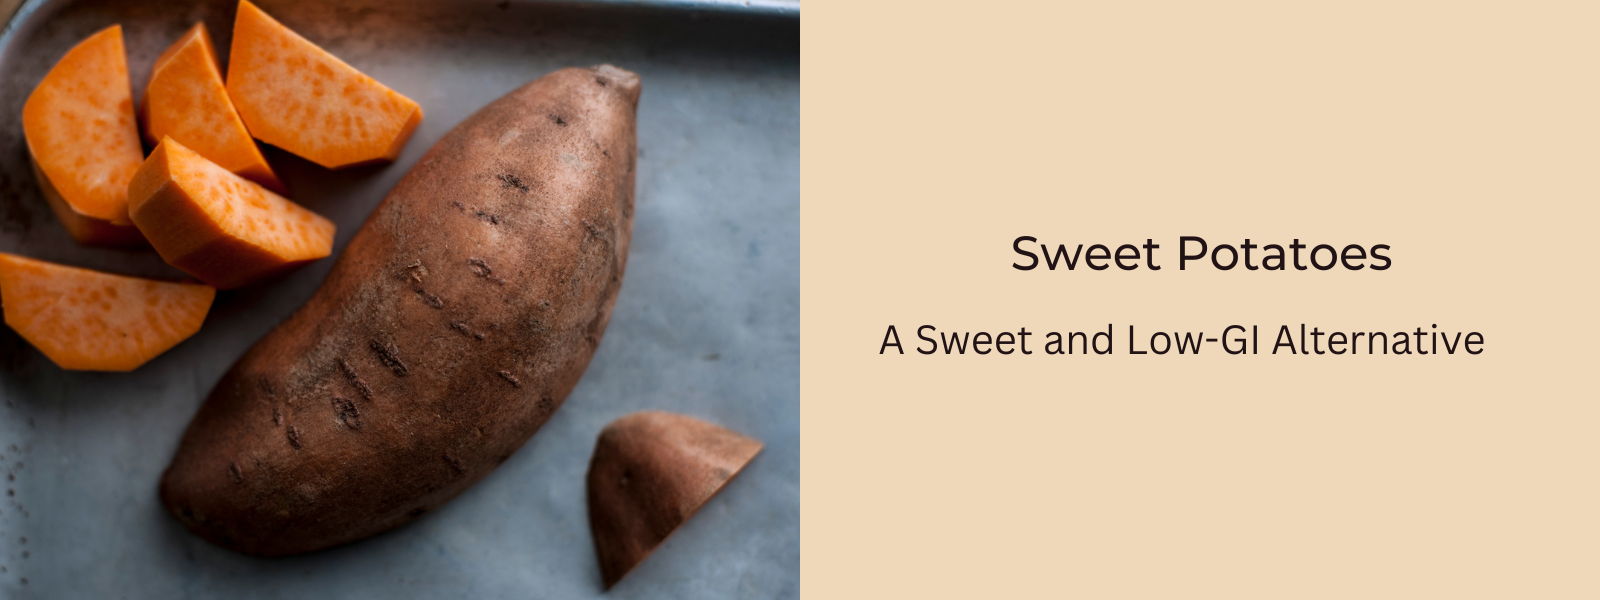 Sweet Potatoes: A Sweet and Low-GI Alternative